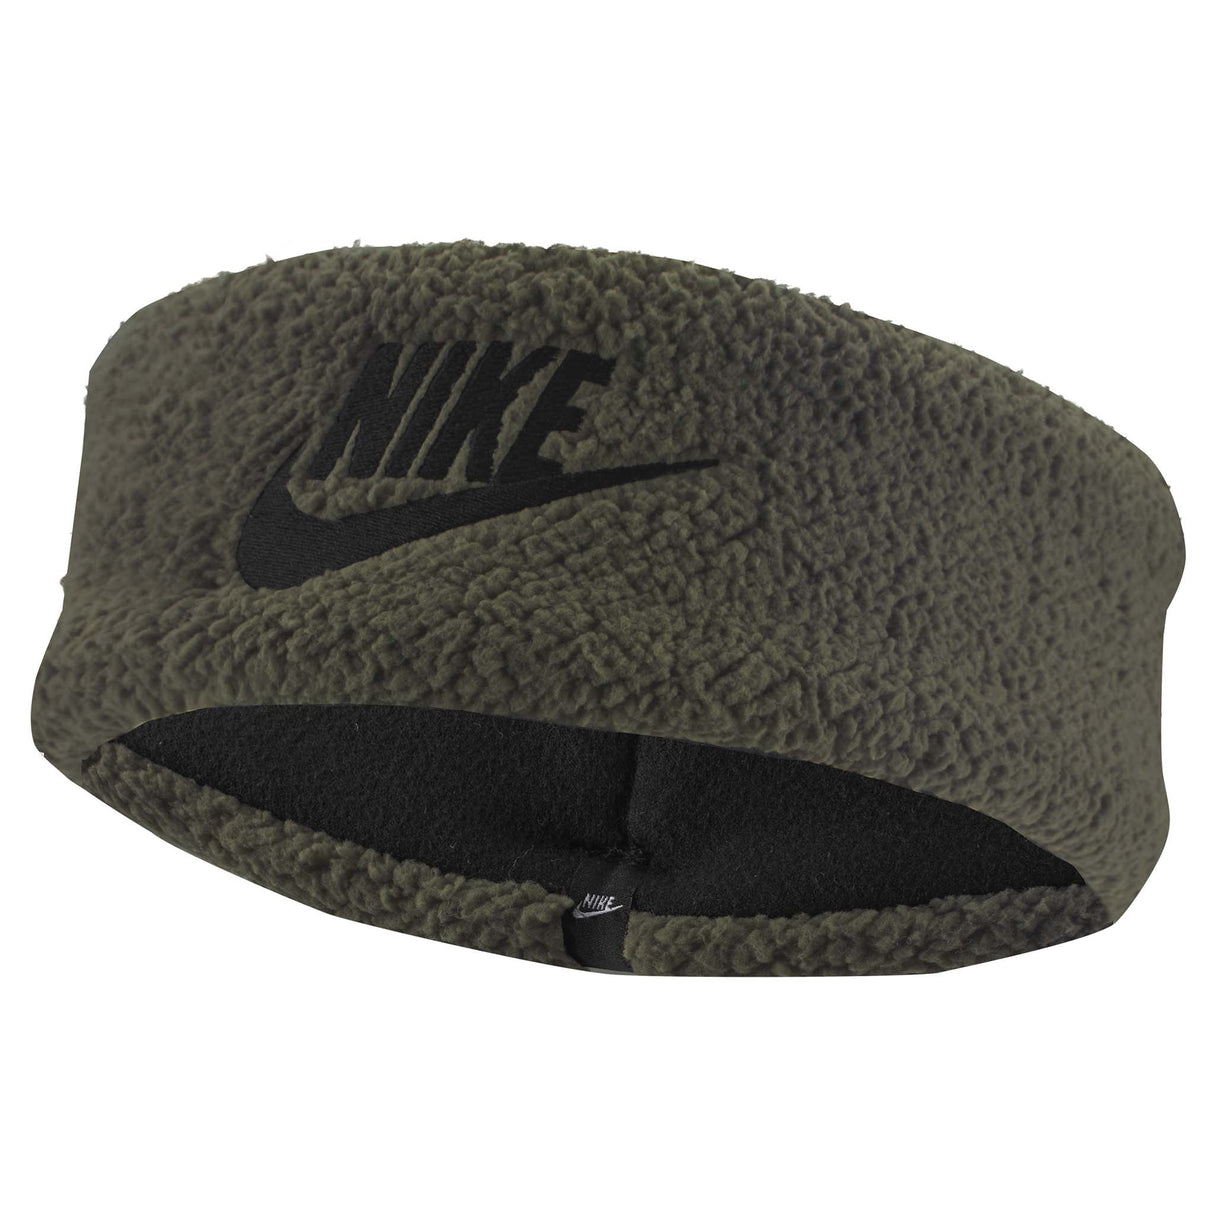 Nike Sherpa Headband bandeaux pour cheveux - medium olive